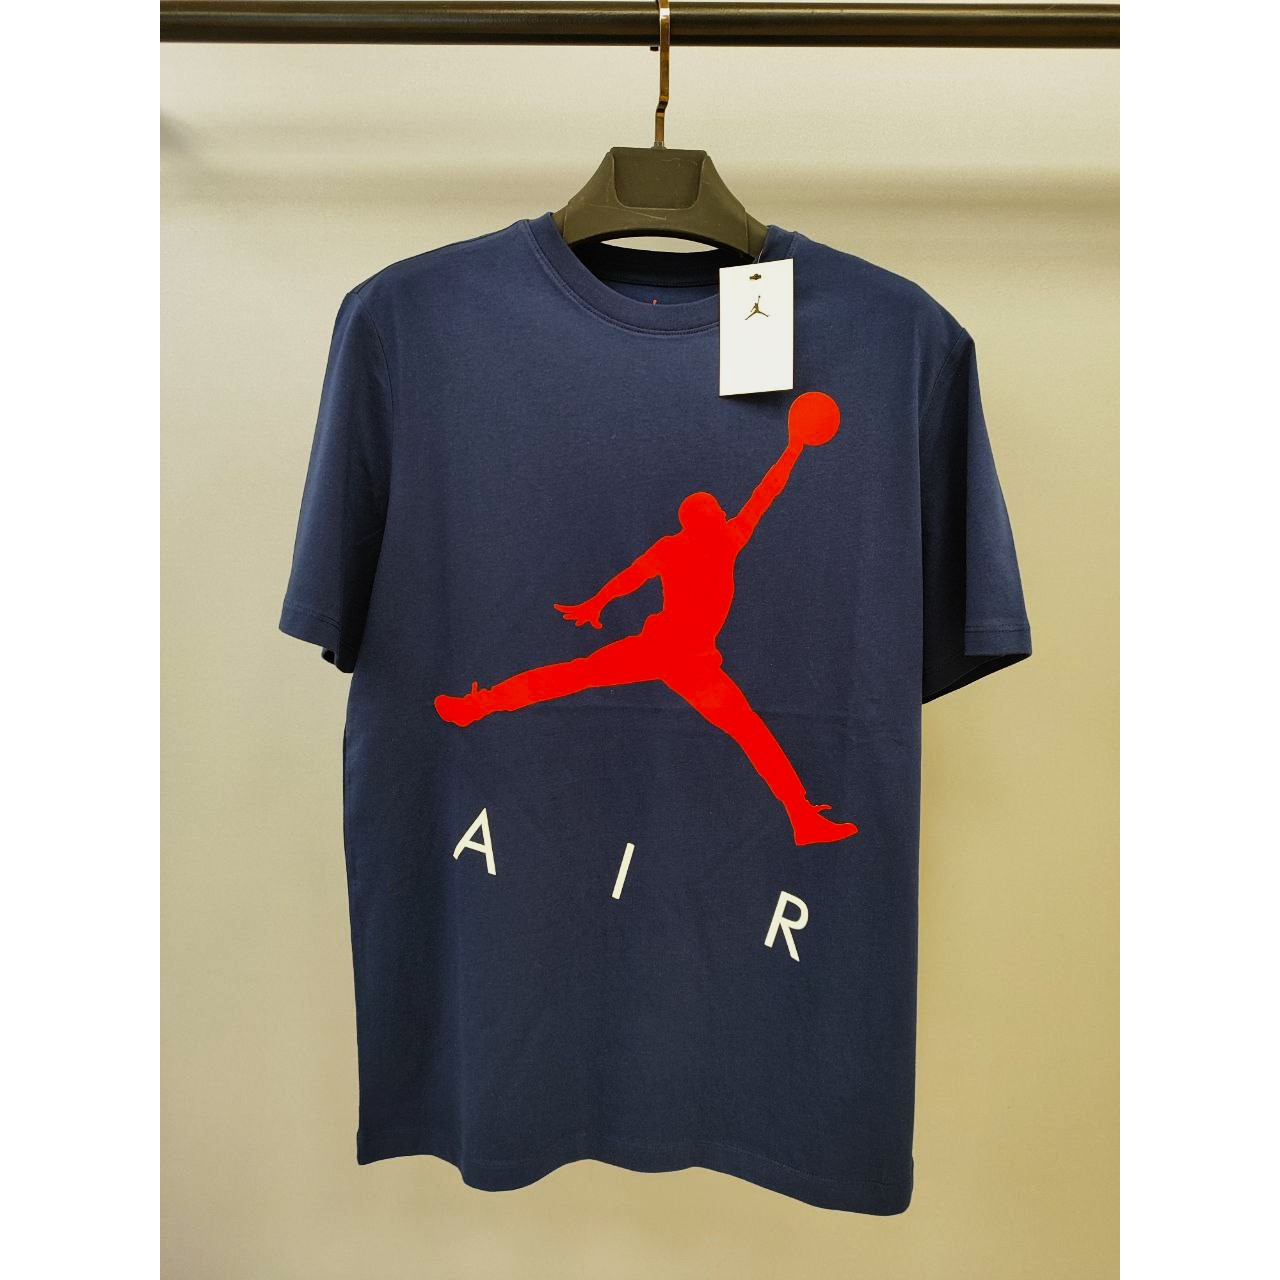 Nike AIR Jordan T-shirt Parliament Blue Red